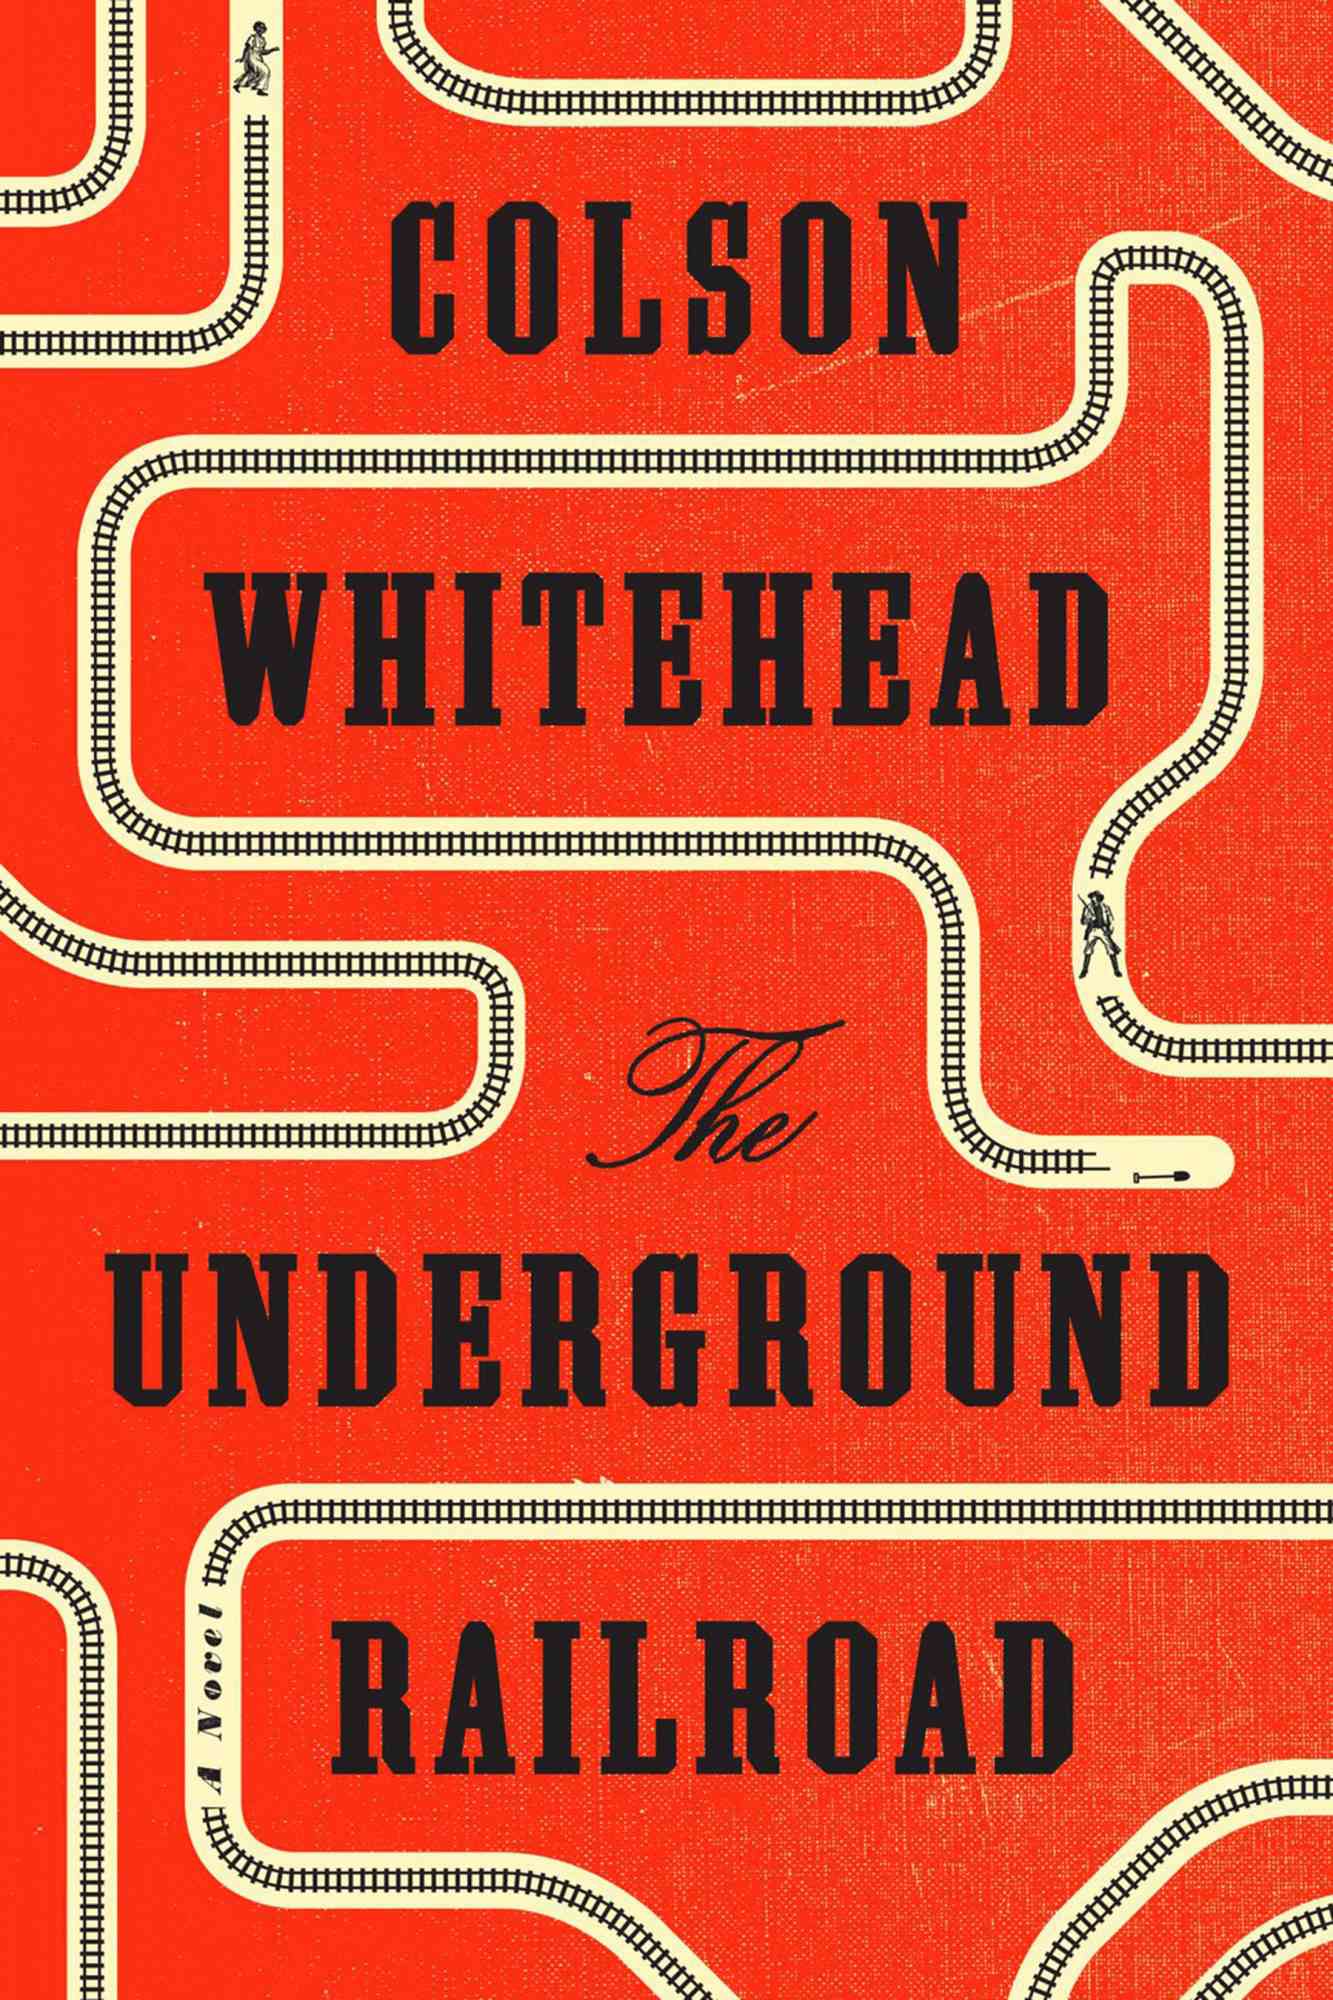 Underground Railroad Barry Jenkins Series Heading To Amazon Ew Com